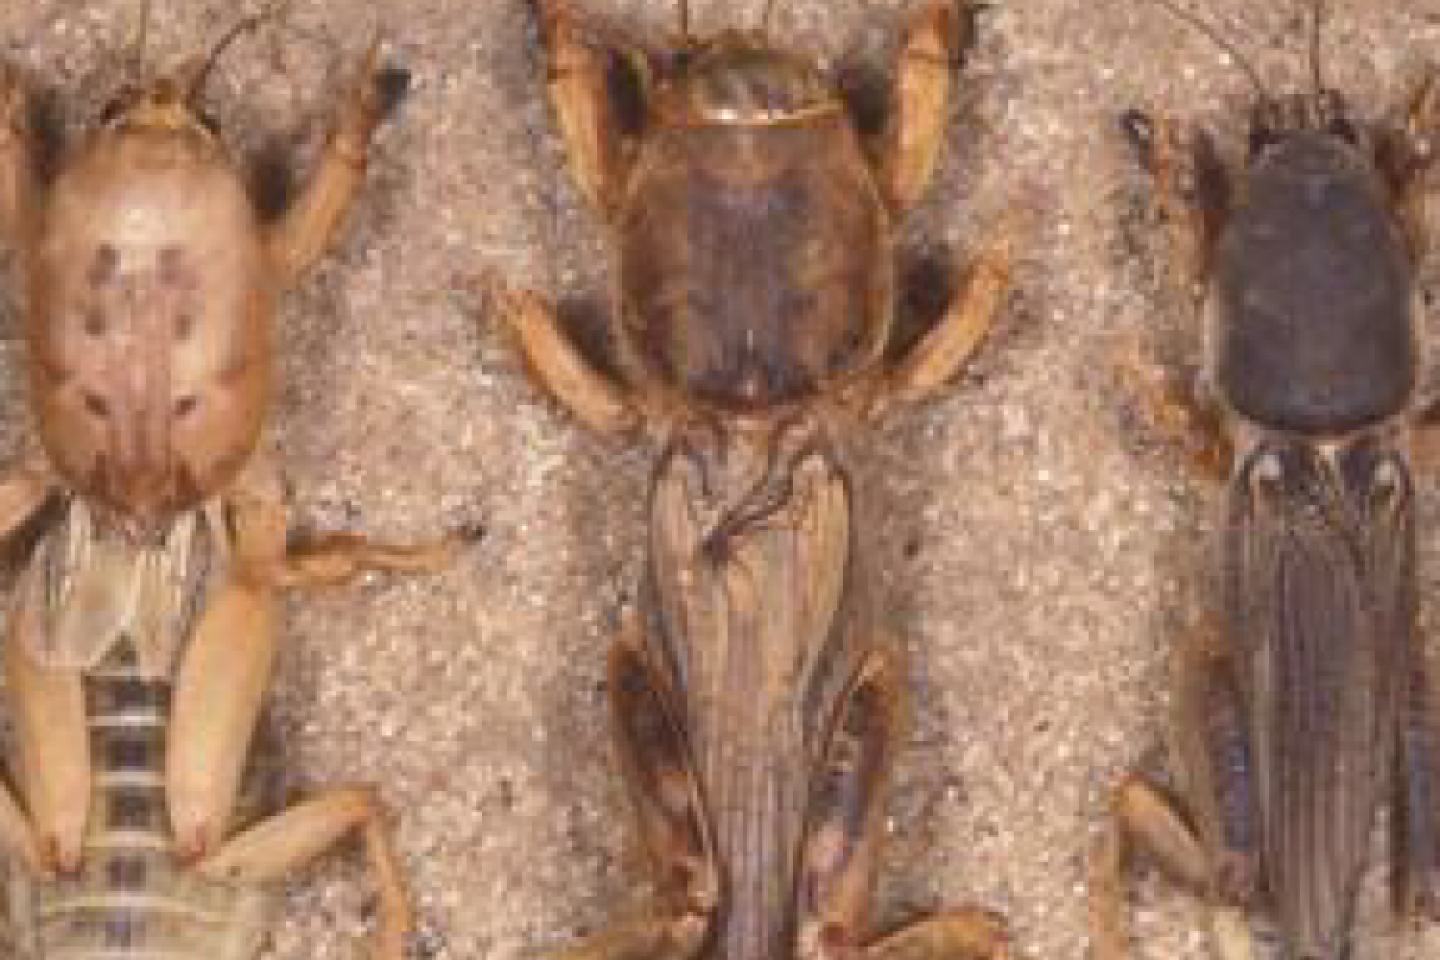 Mole Crickets Image